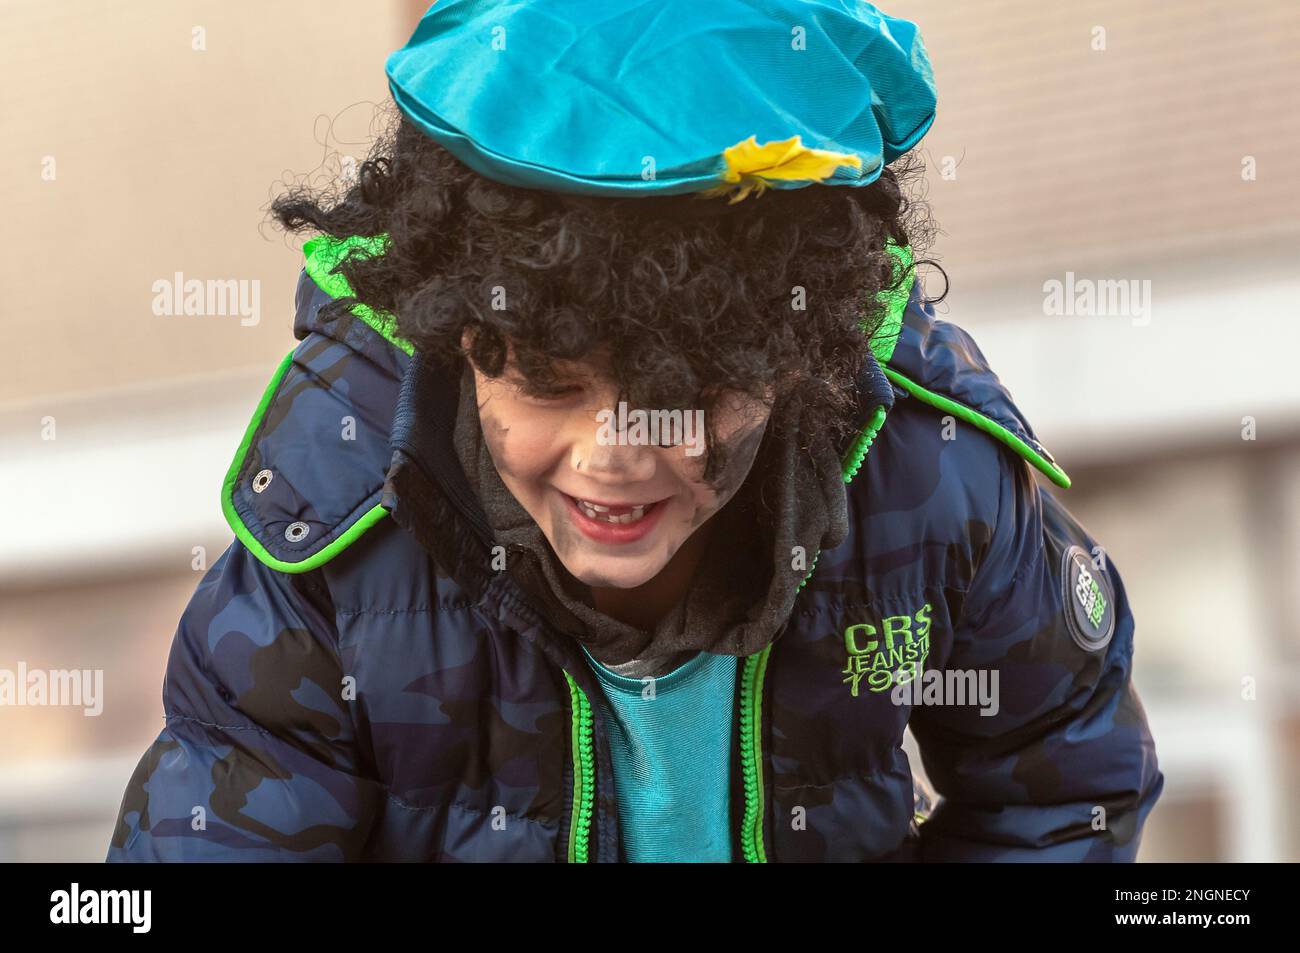 cheerful smiling boy dressed as Zwarte Piet figure Dutch culture Stock Photo